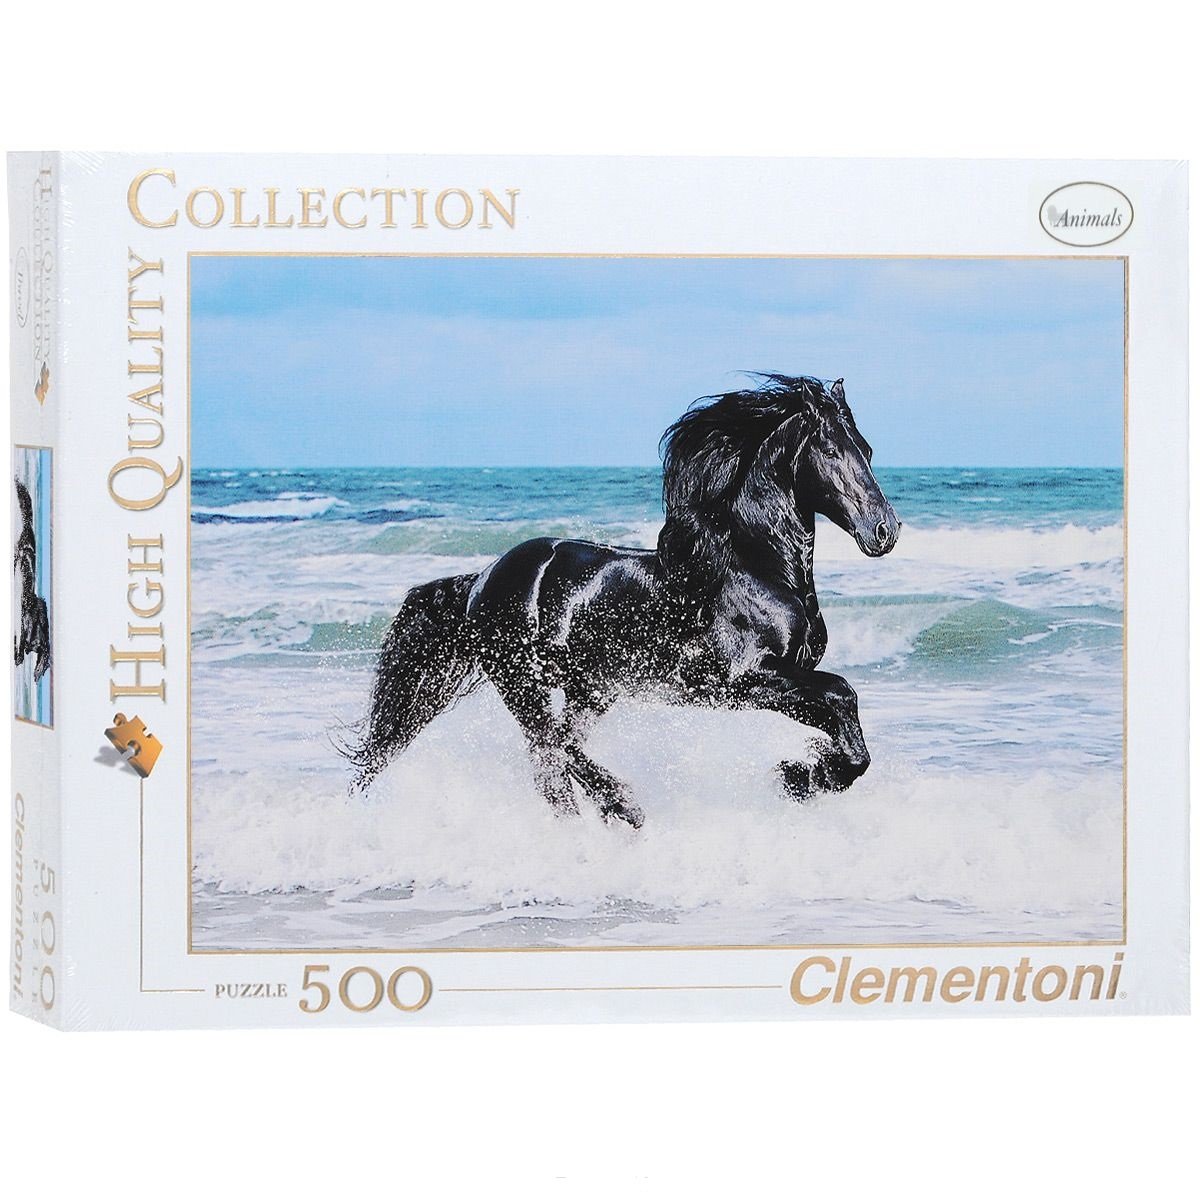 

Пазл 500К 30175 Конь море (High Quality Collection) (Астрайт)